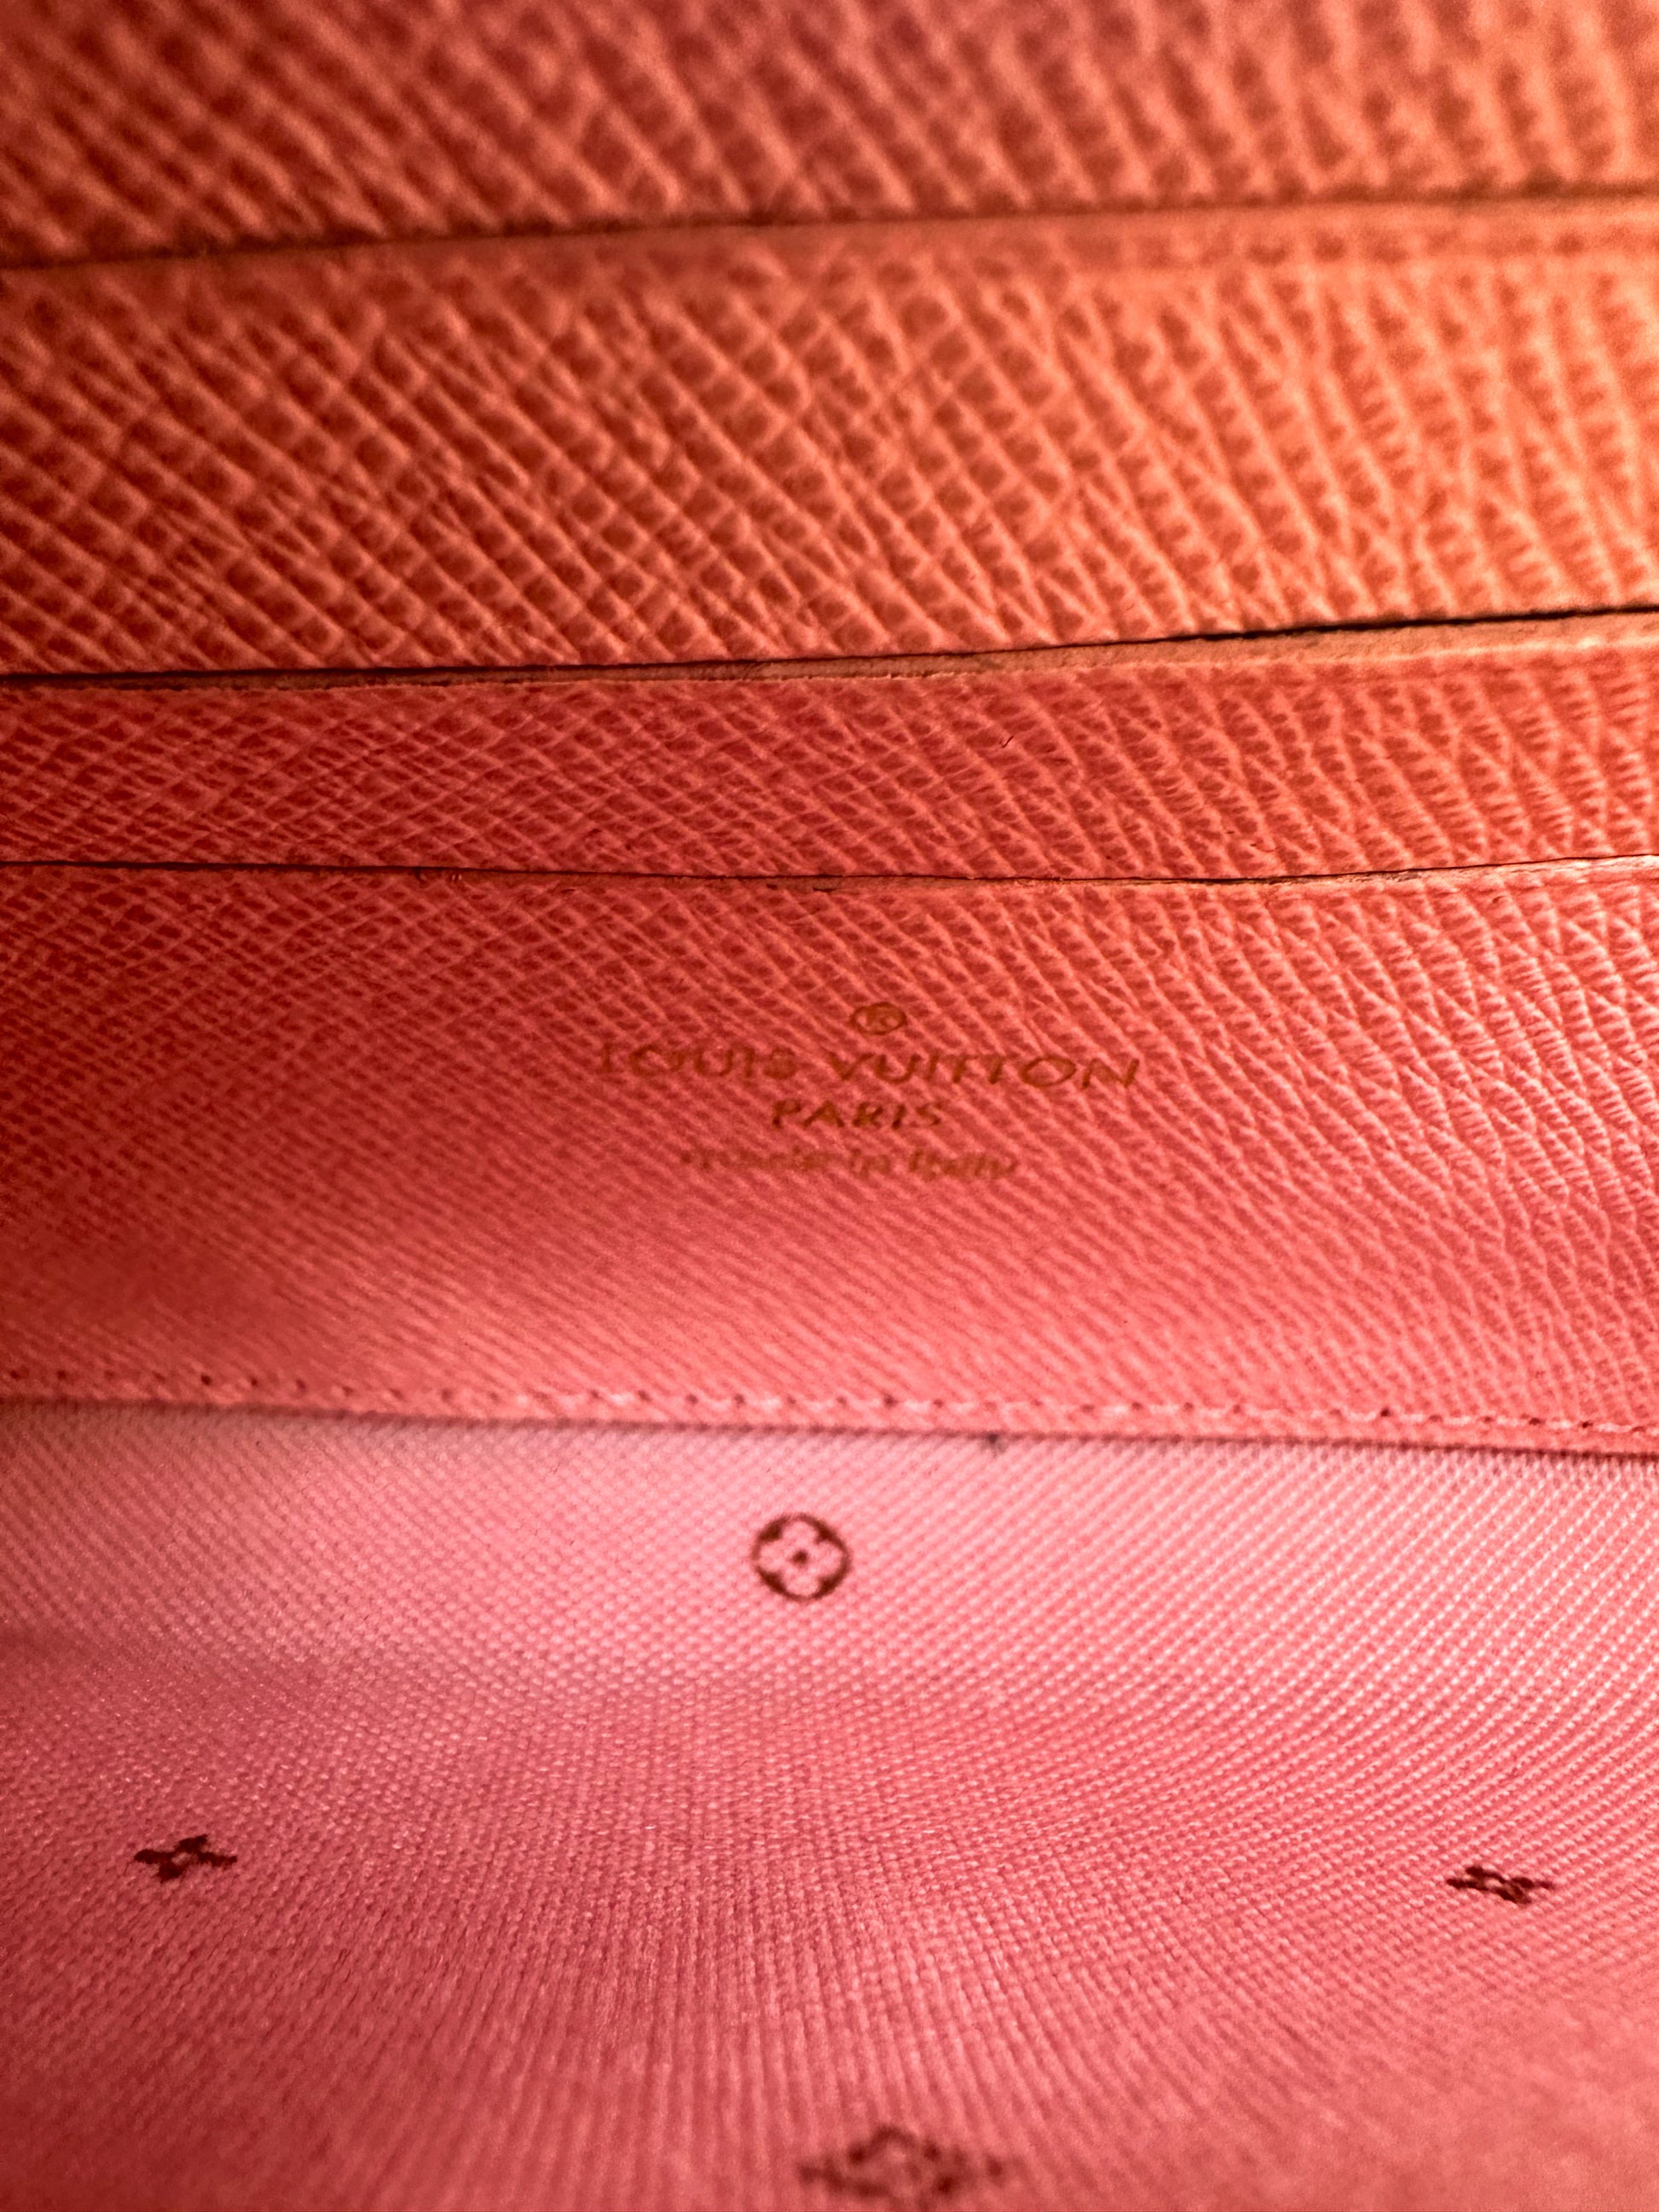 Louis Vuitton Félicie Strap & Go Monogram Khaki Green/Ebony